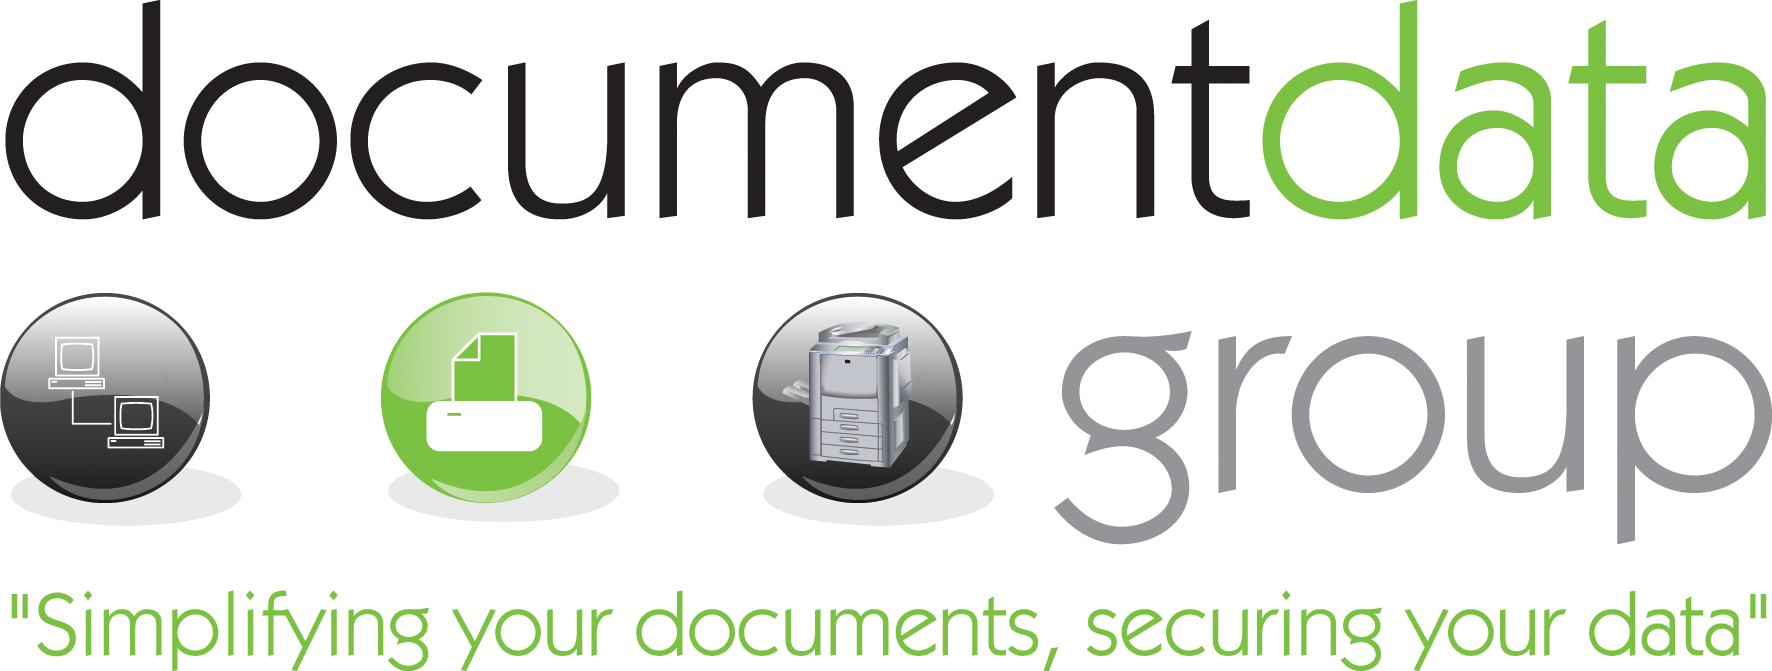 document data logo.png